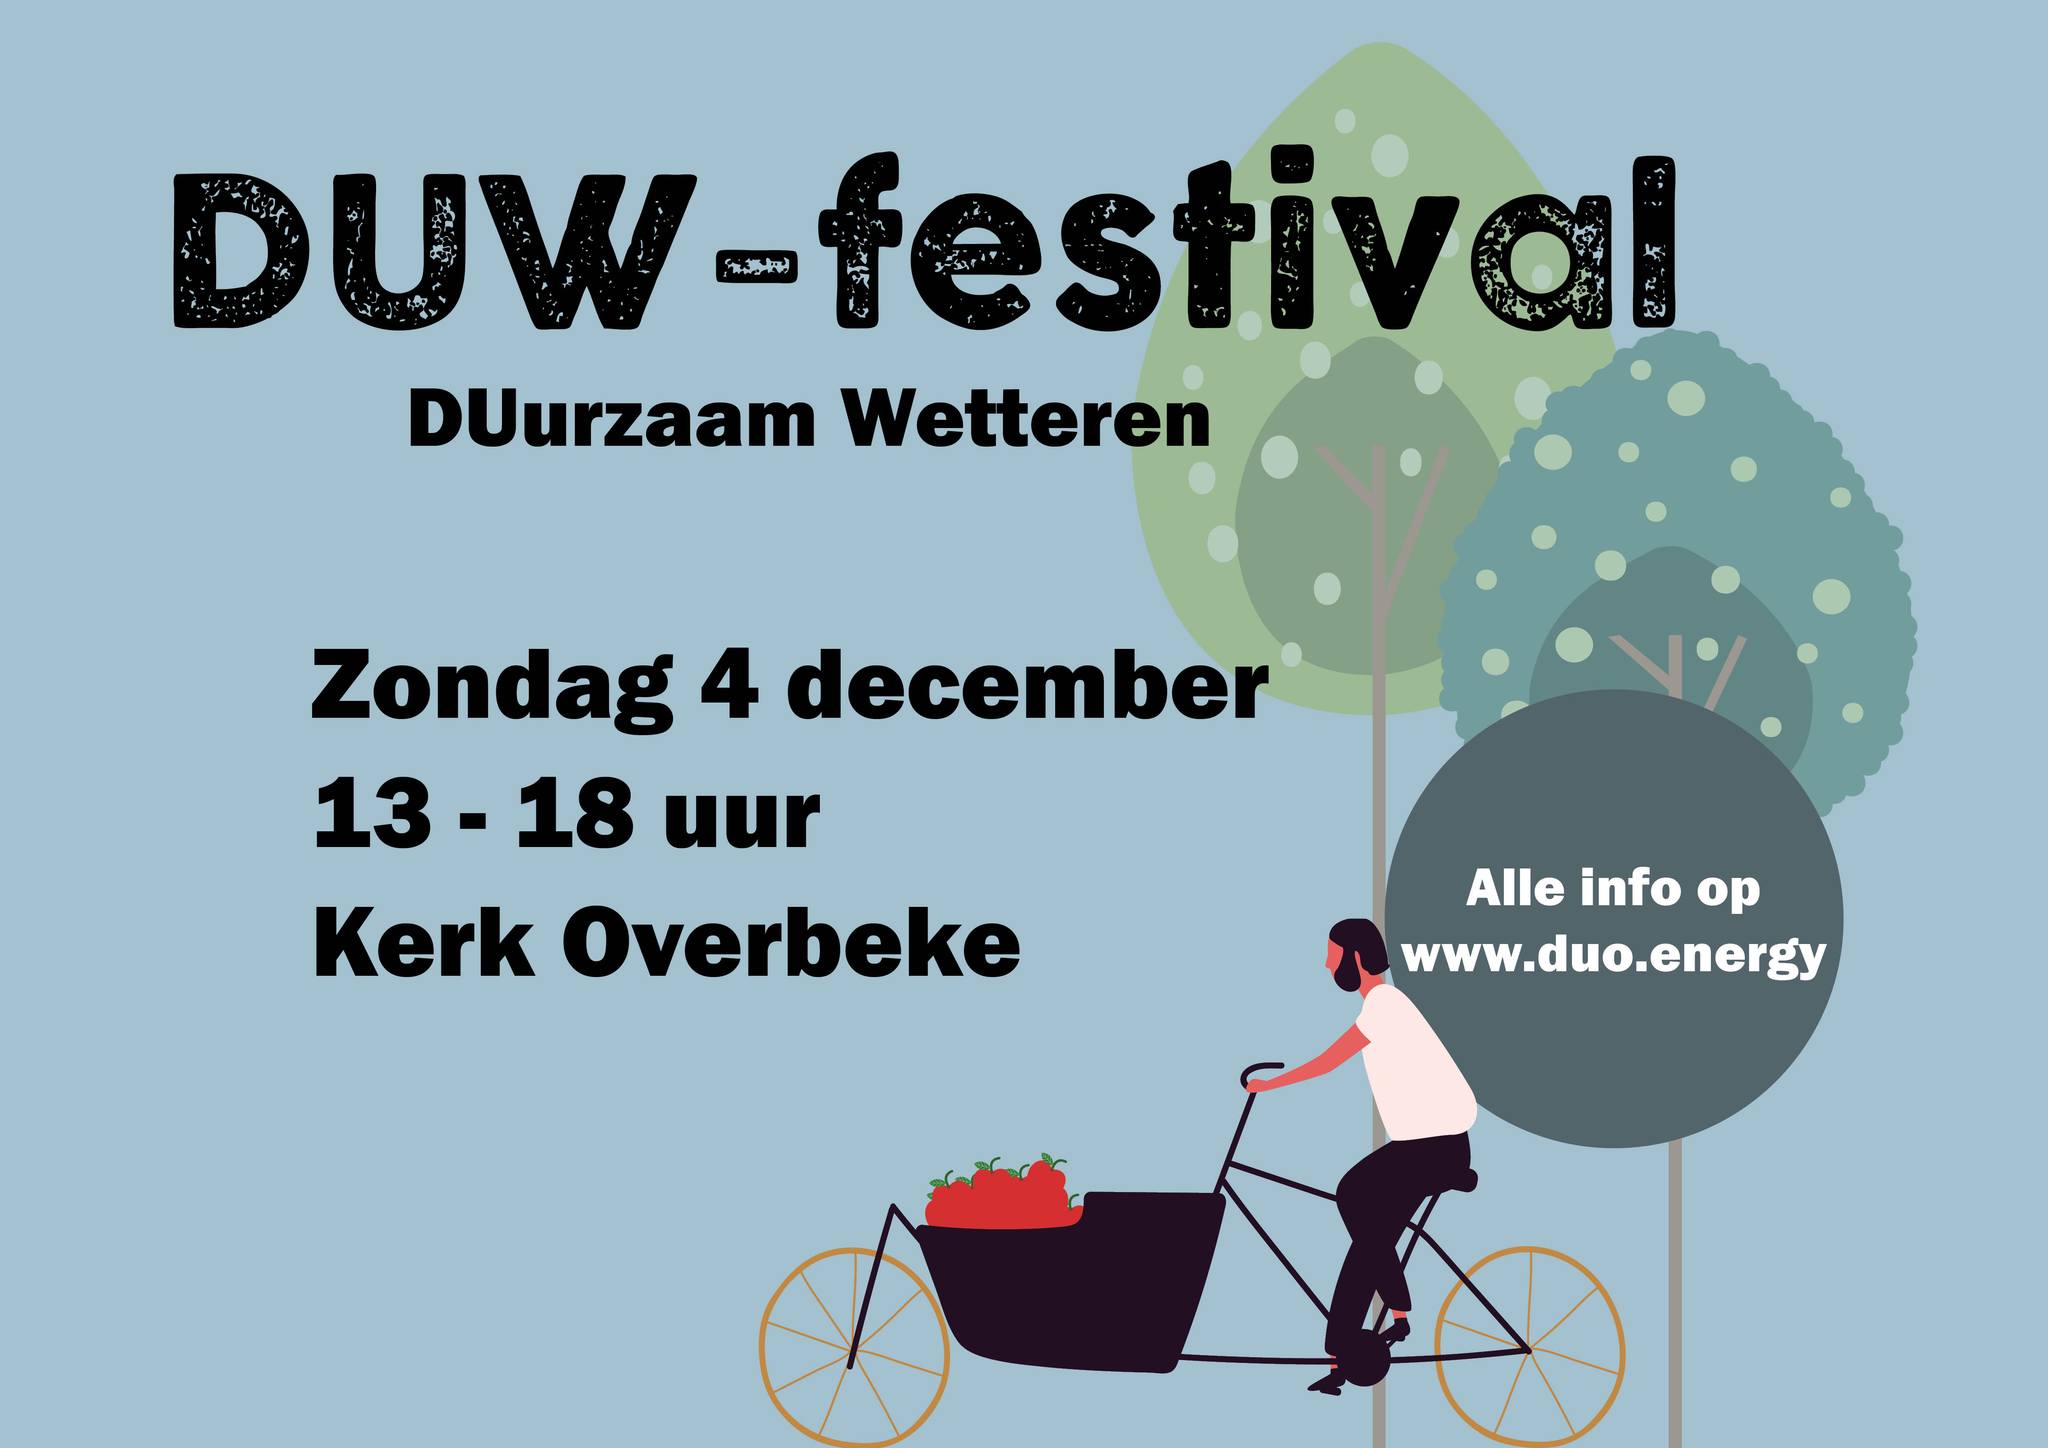 DUW festival in Overbeke